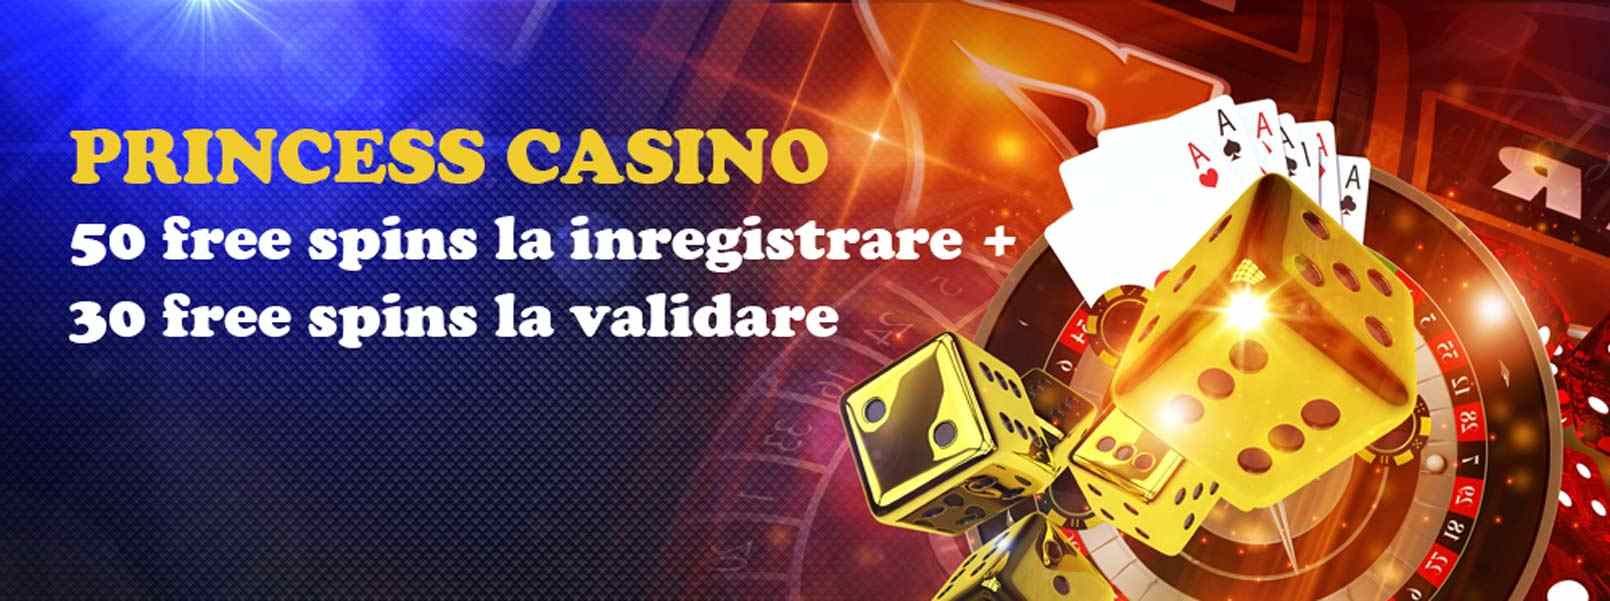 princess casino bonus fara depunere online